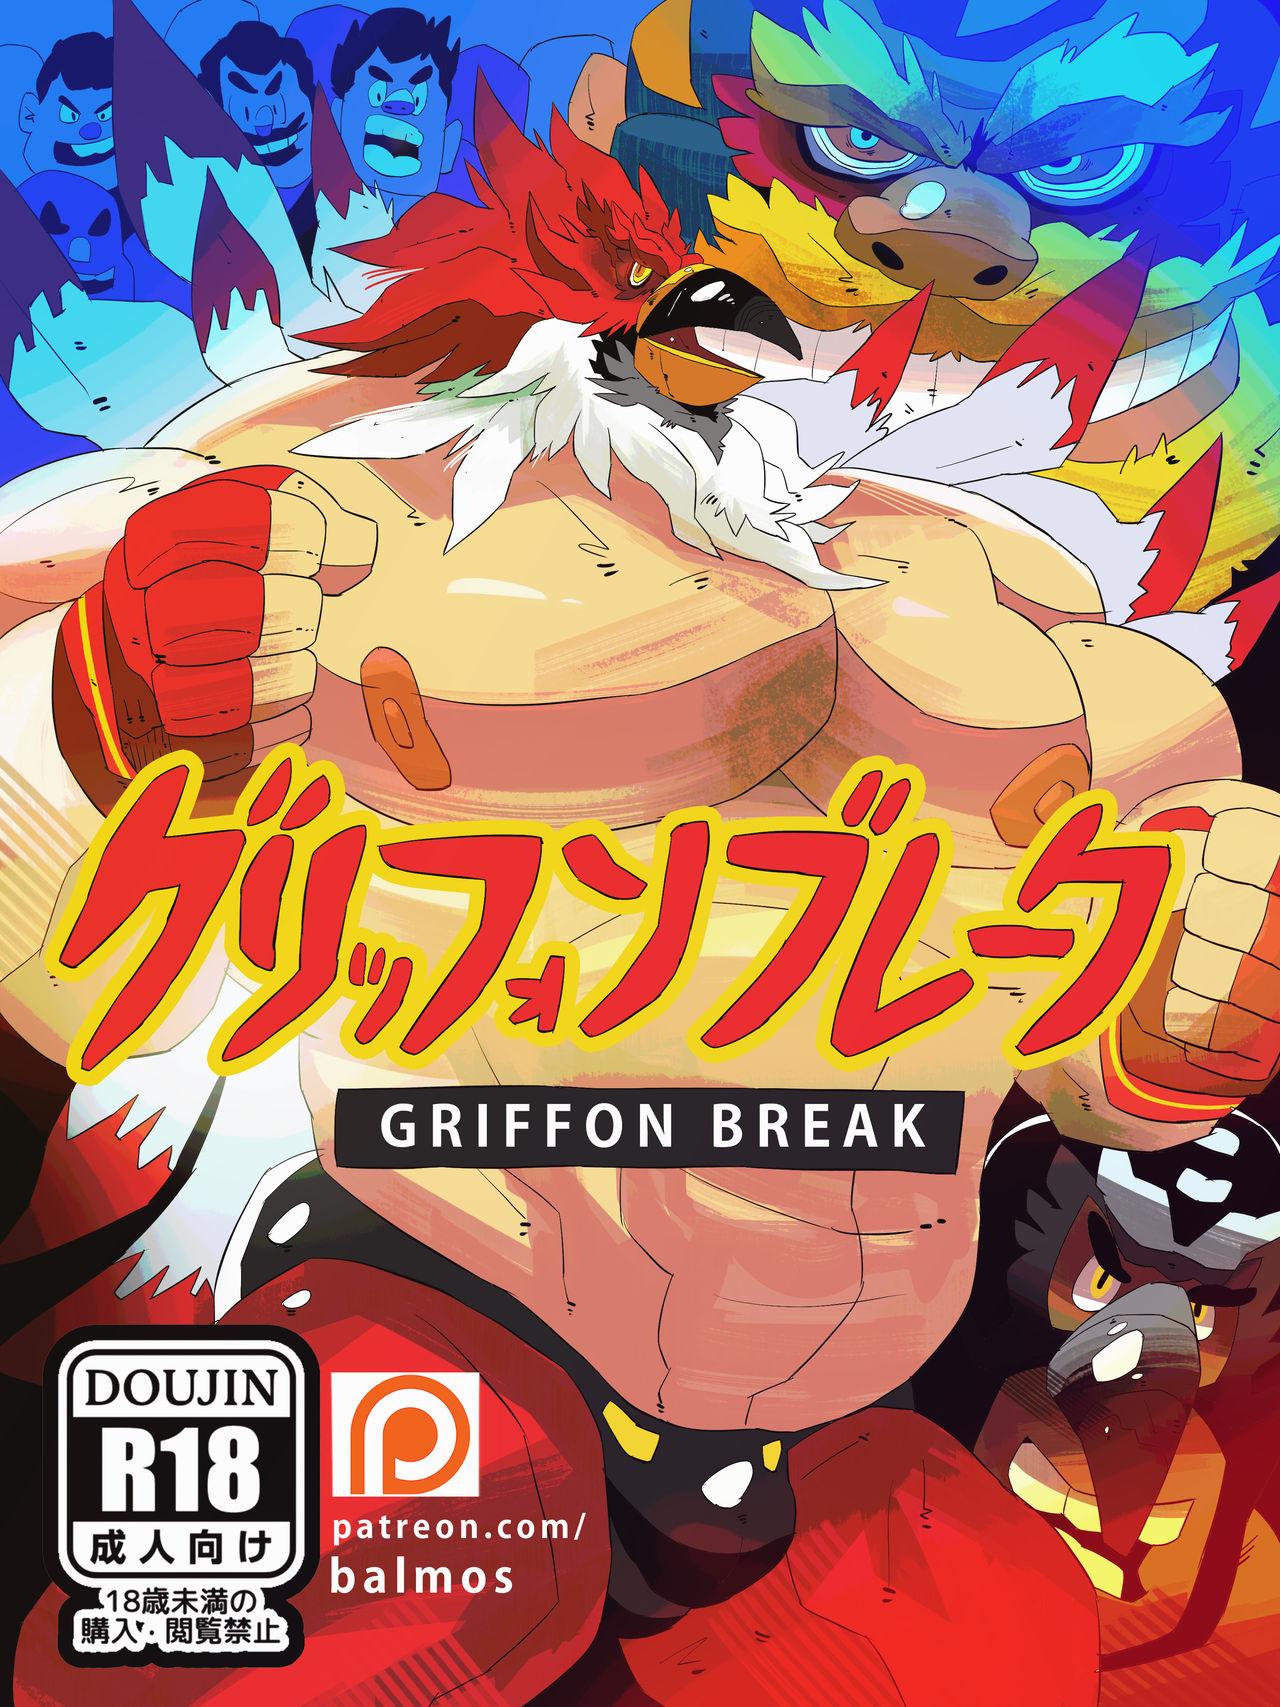 Gape Griffon Break HD - King of fighters Fatal fury | garou densetsu Gym - Page 1